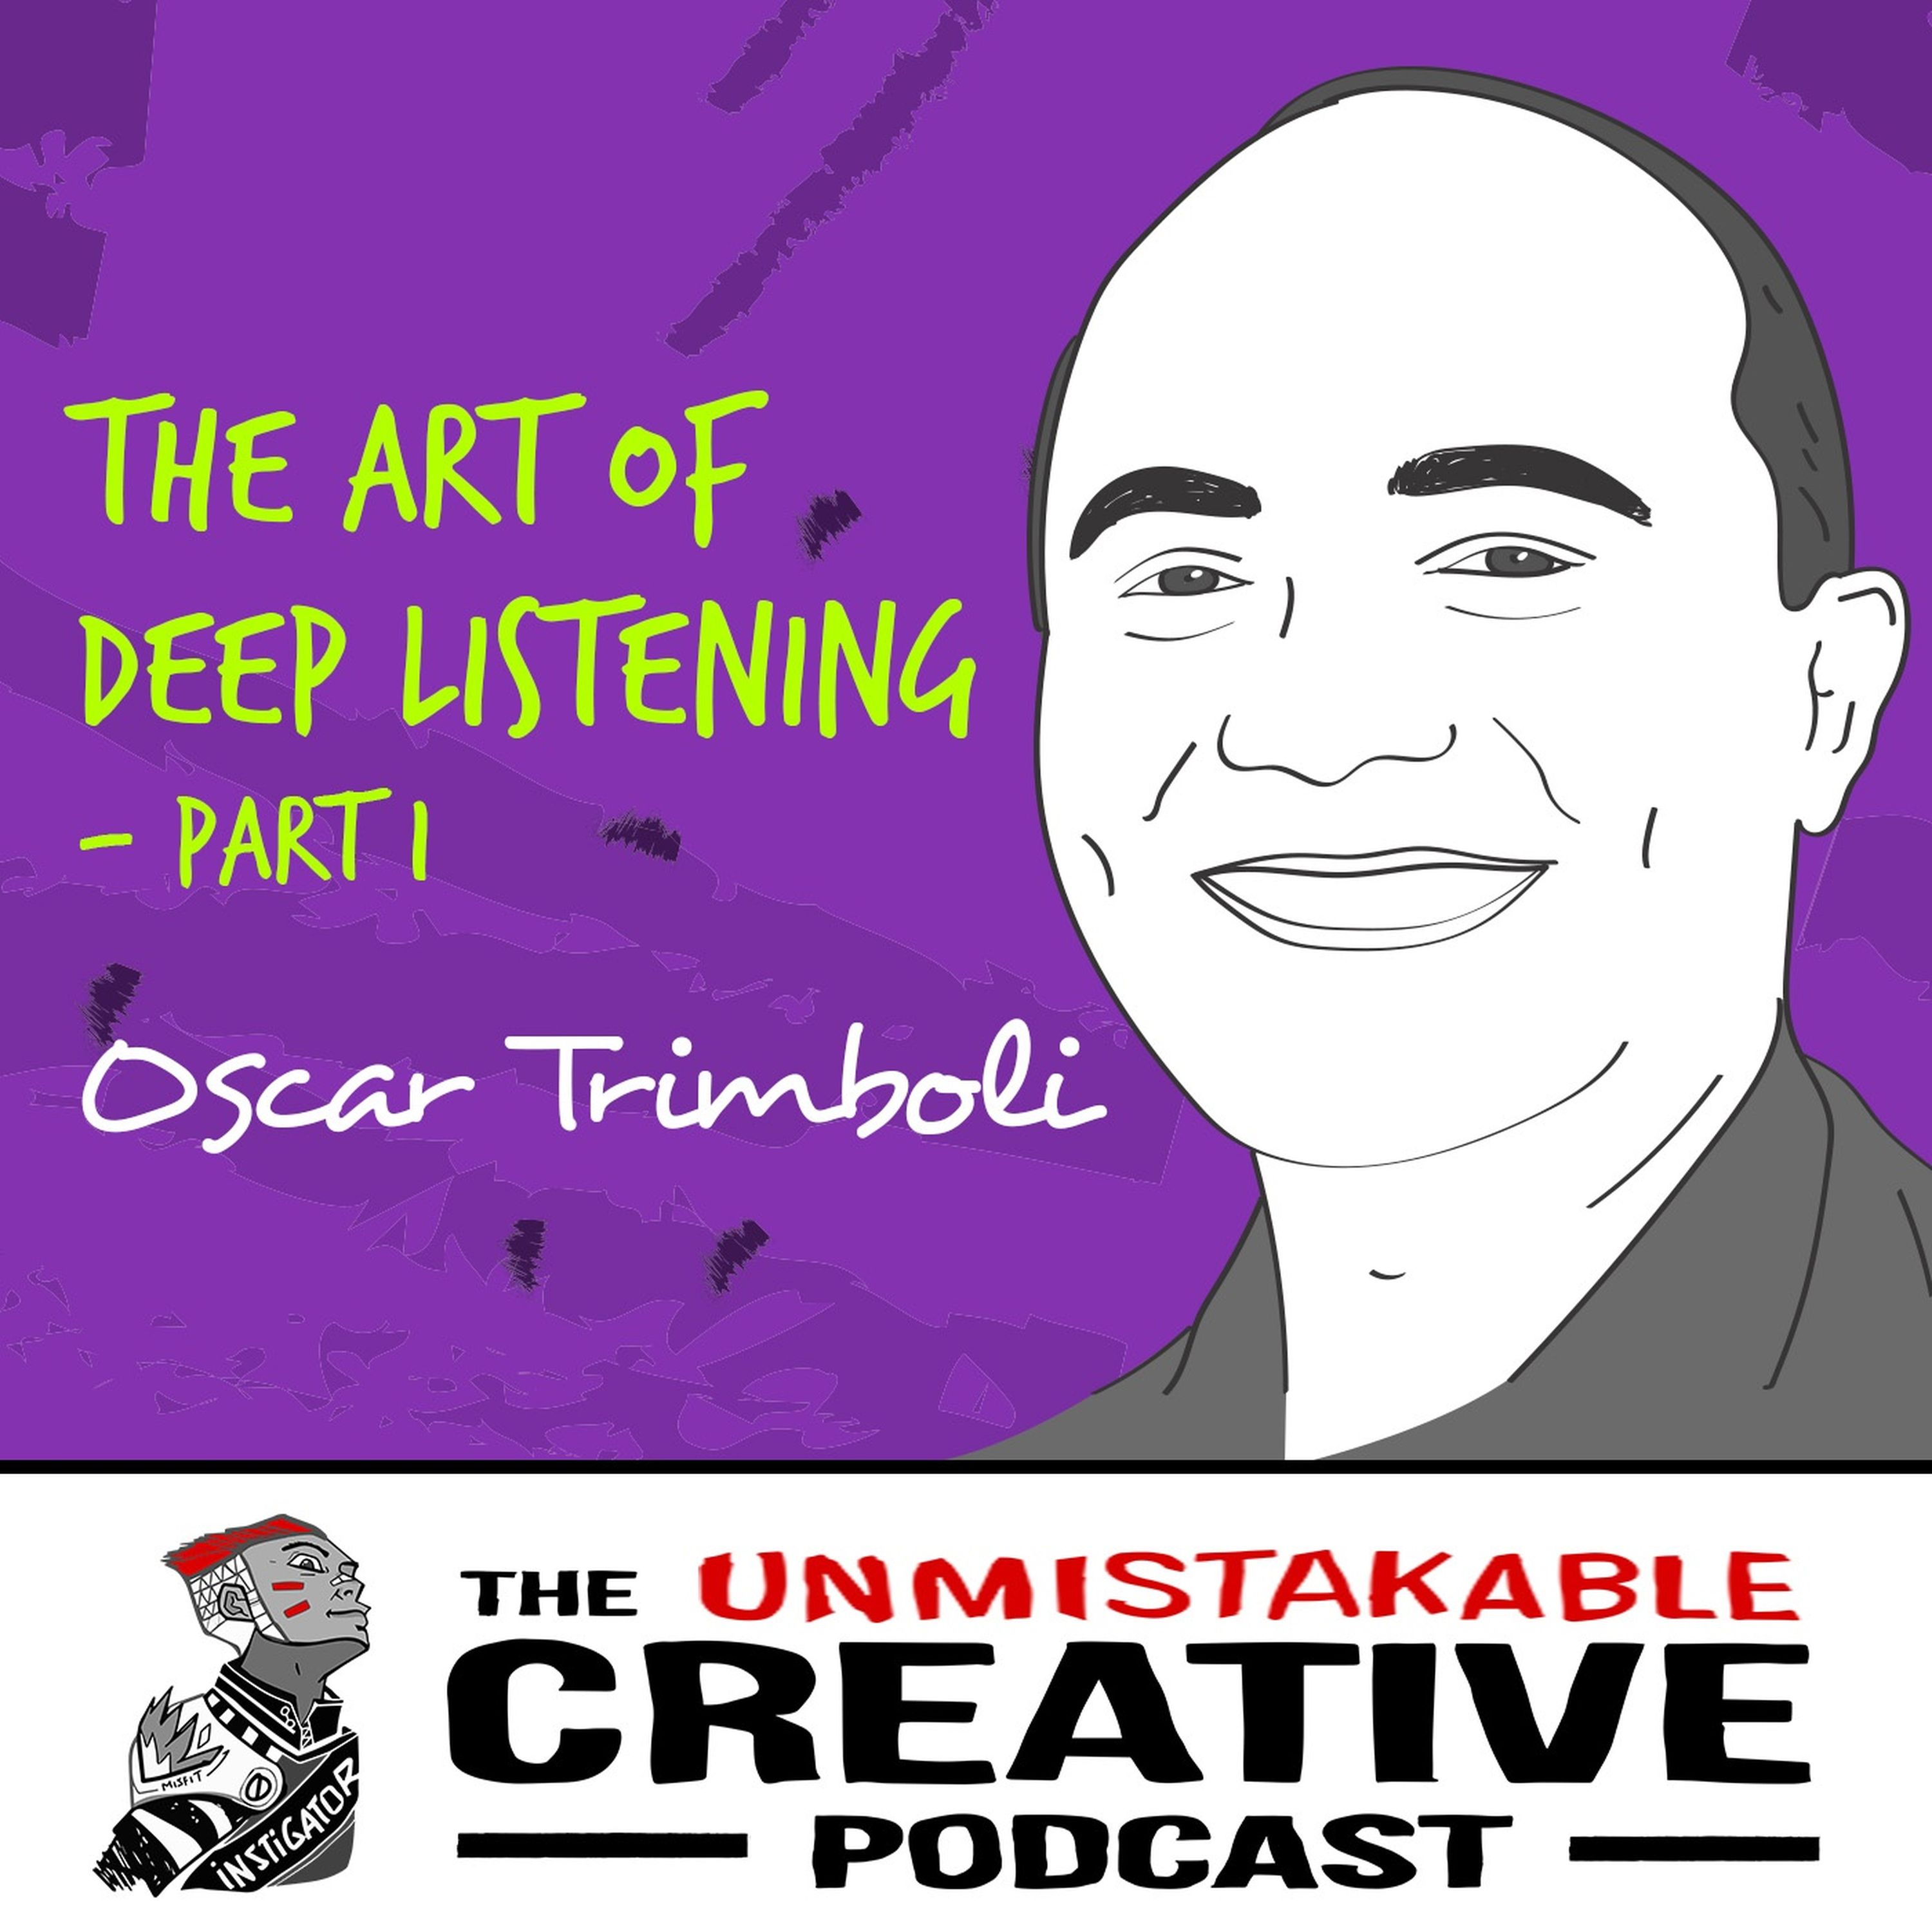 Oscar Trimboli: The Art of Deep Listening - Part 1 Image